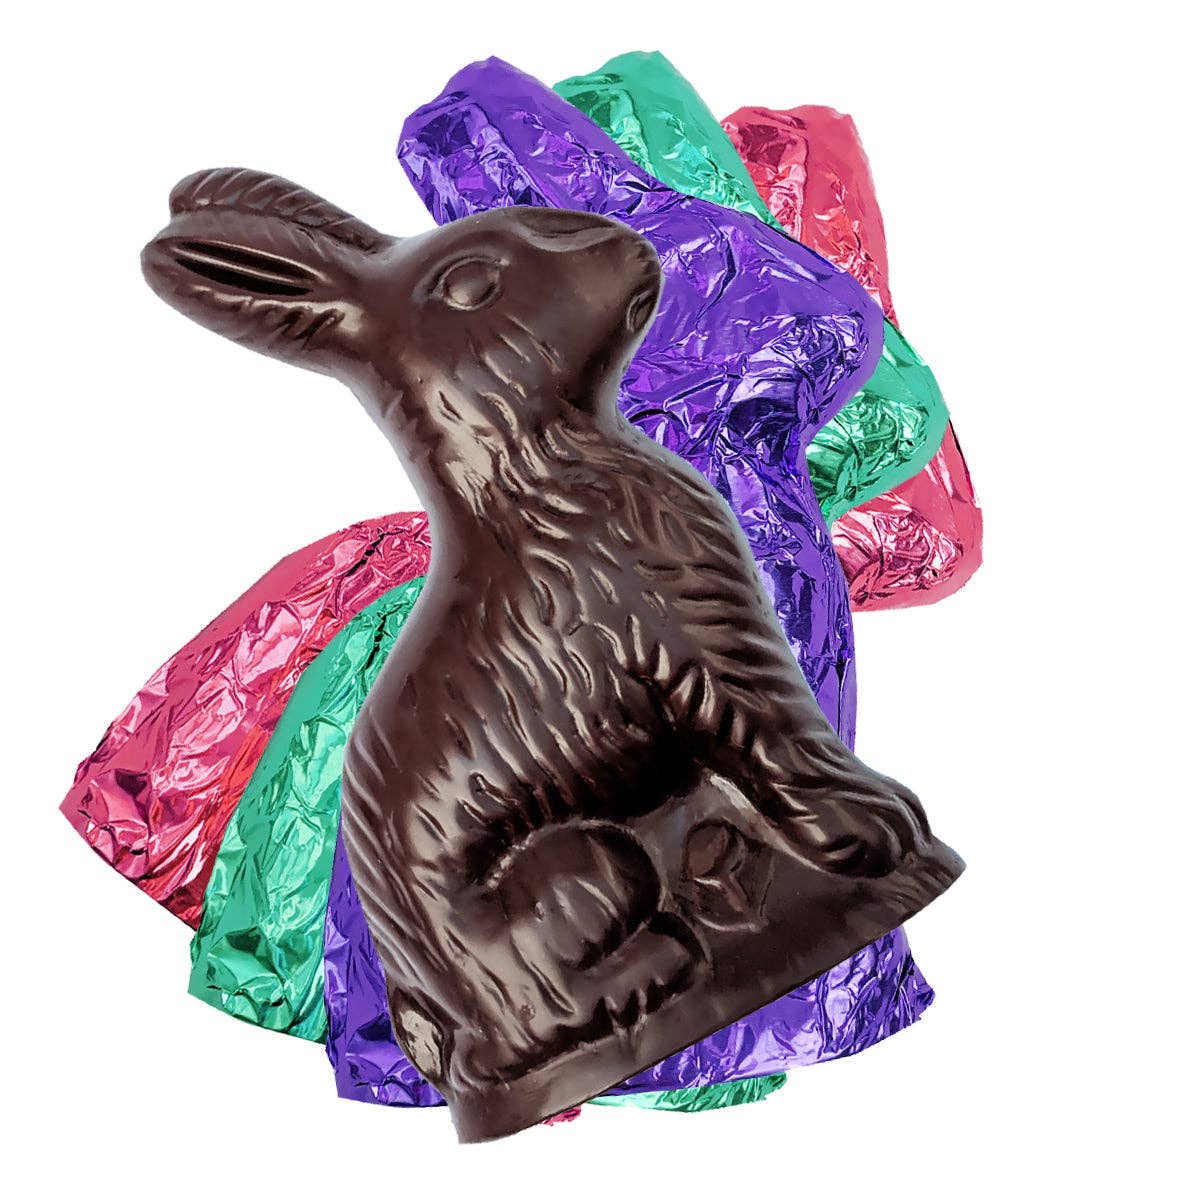 Dark Chocolate Bunny - 81%